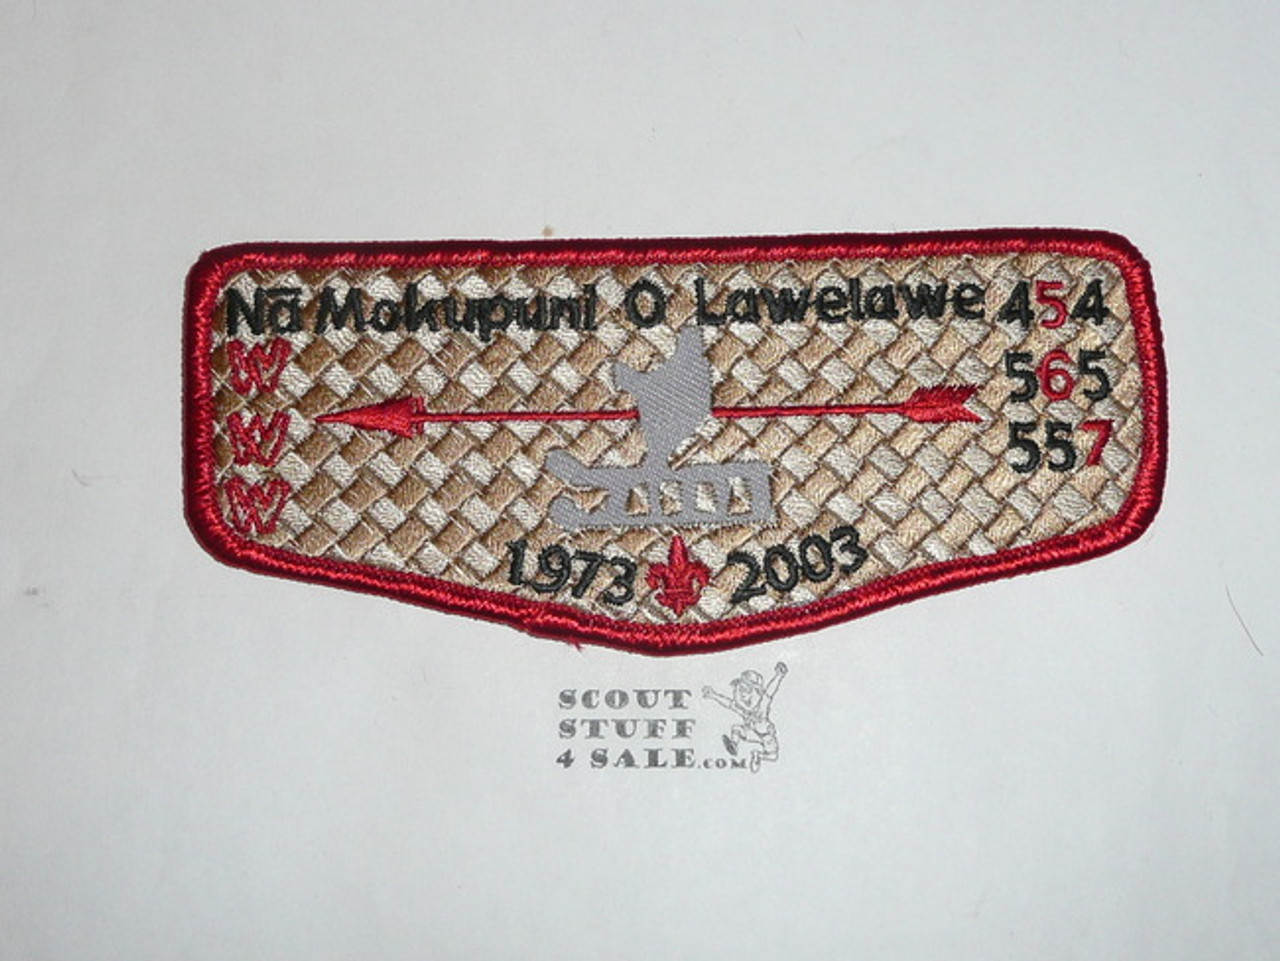 Order of the Arrow Lodge #567 NaMokupuni OLawelawe f2 30th Anniversary Flap Patch - Boy Scout